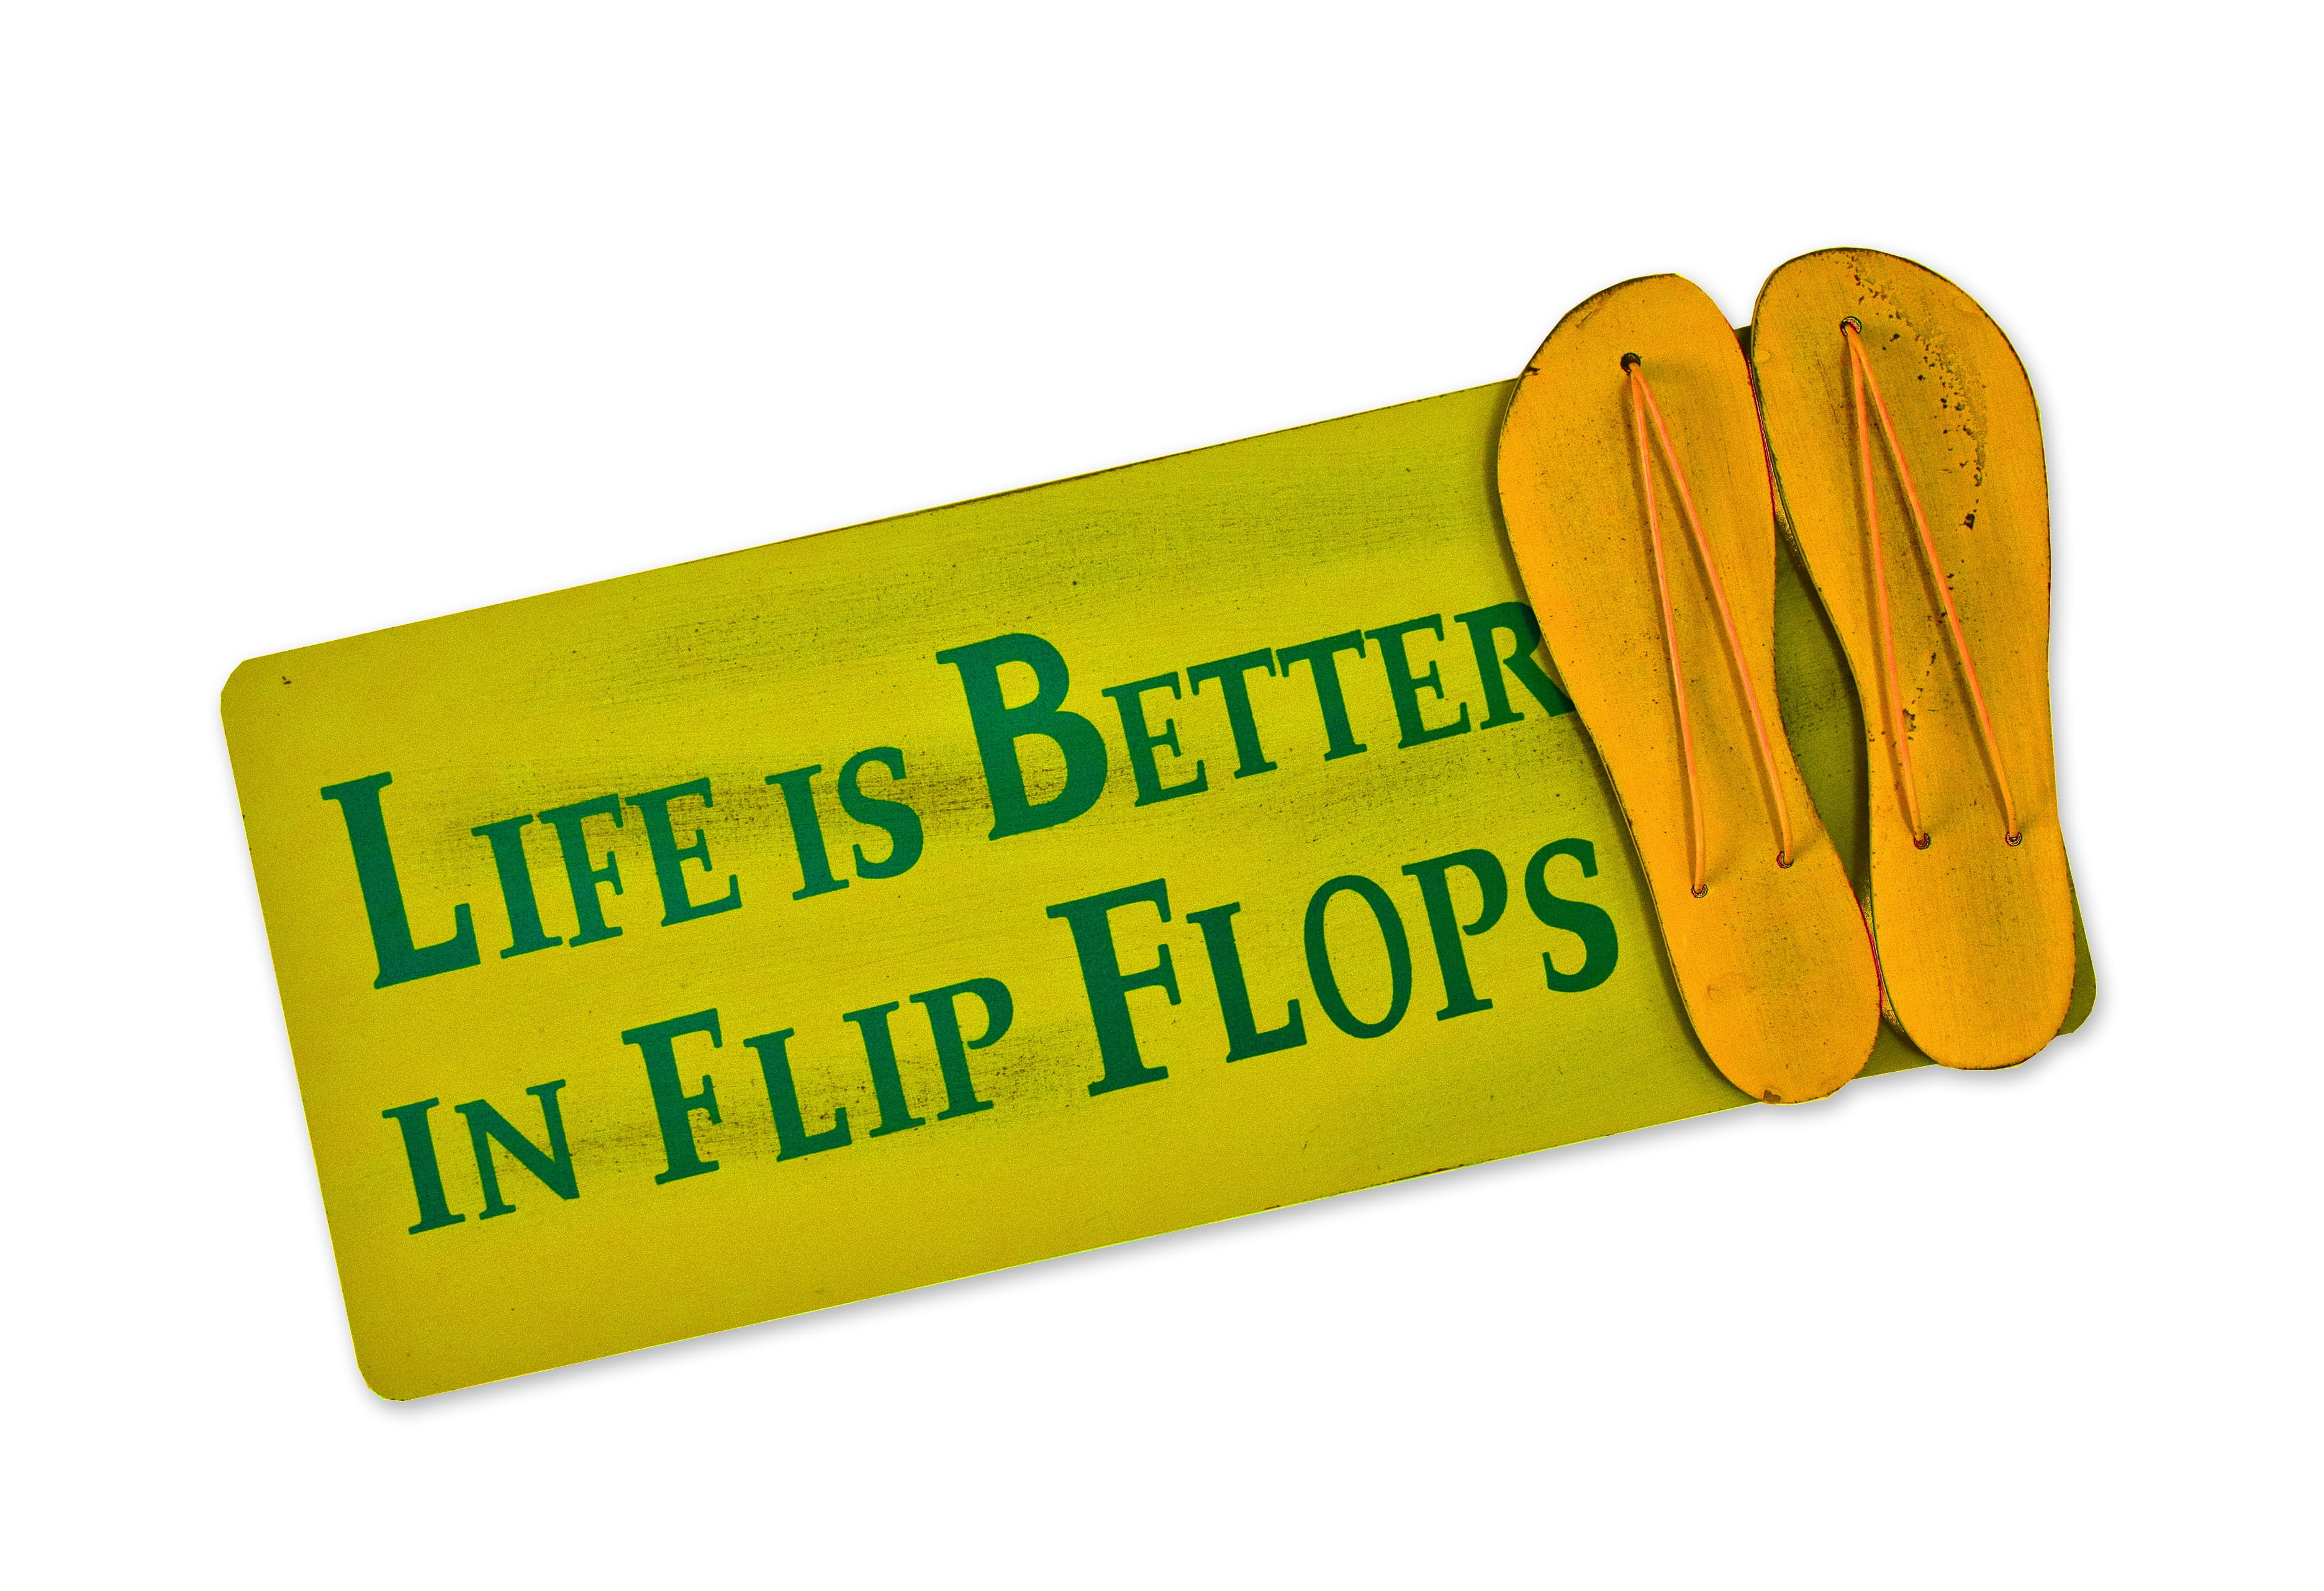 Flip Flops, Shield, Postcard, Live, better, shoes, funny, greeting card